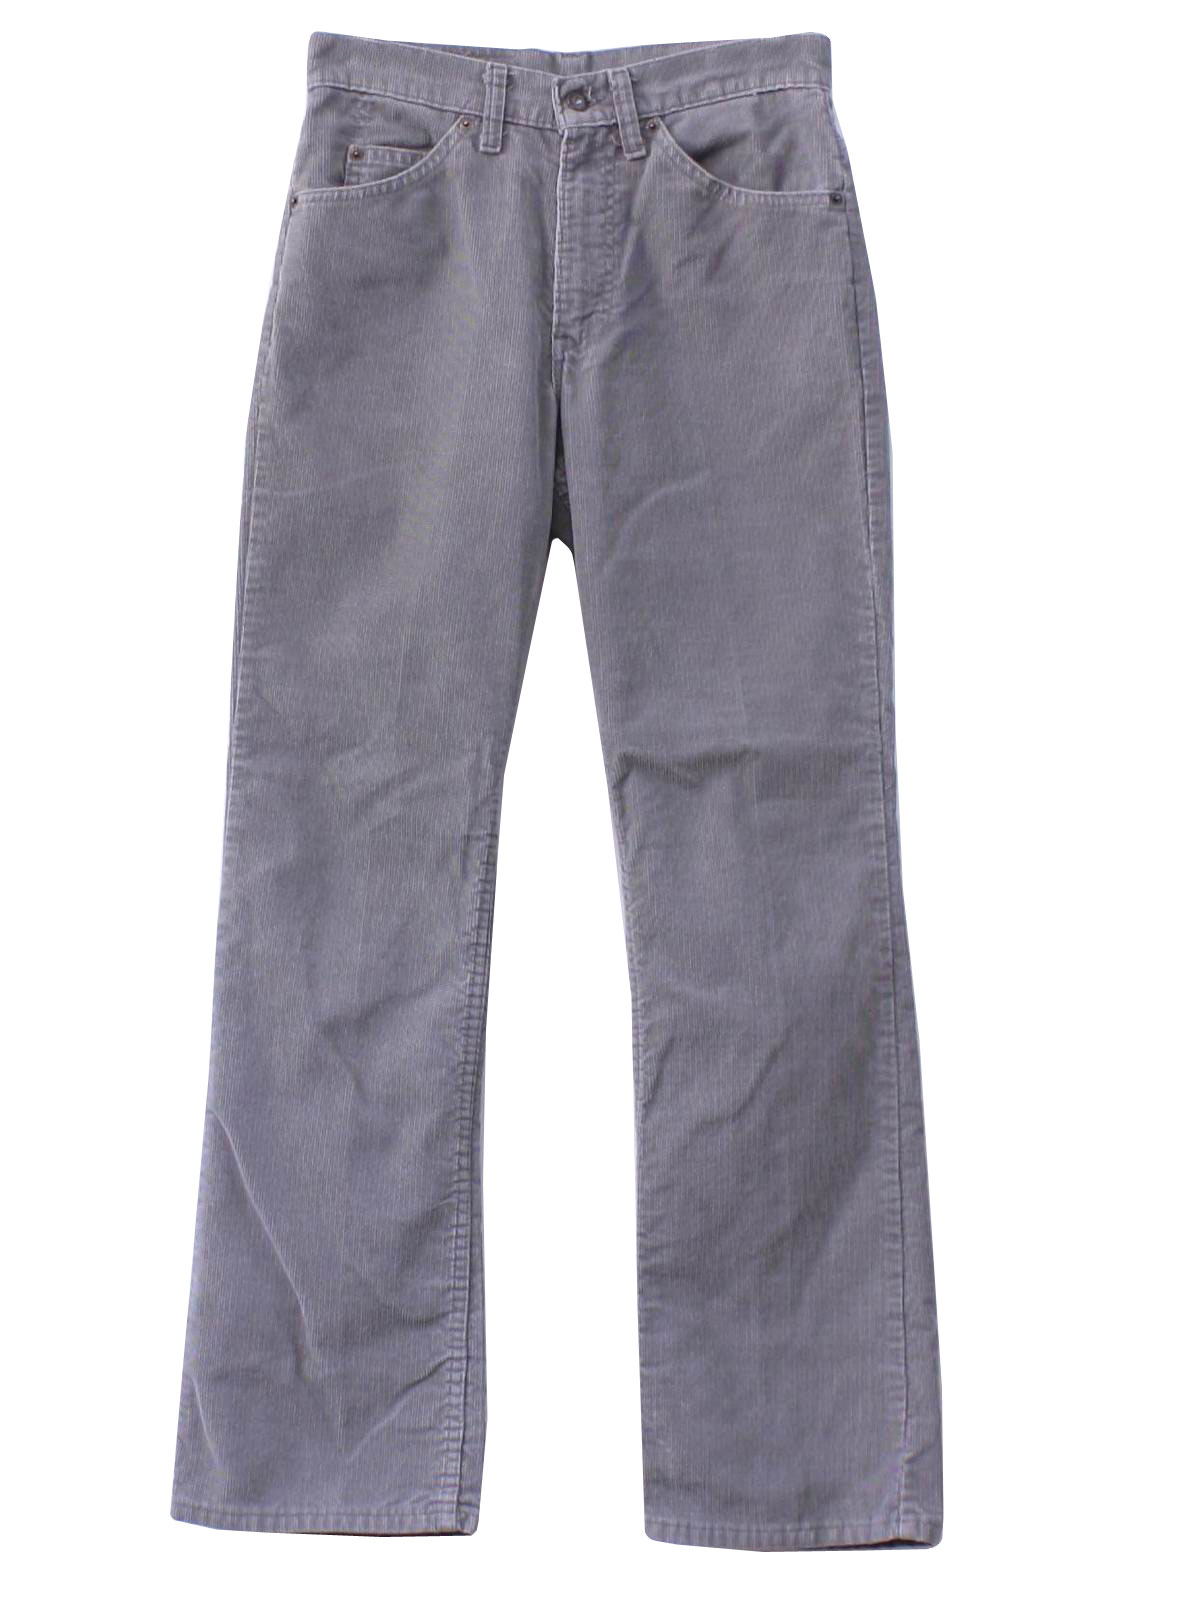 1970's Retro Flared Pants / Flares: 70s -Levis- Mens light gray cotton ...